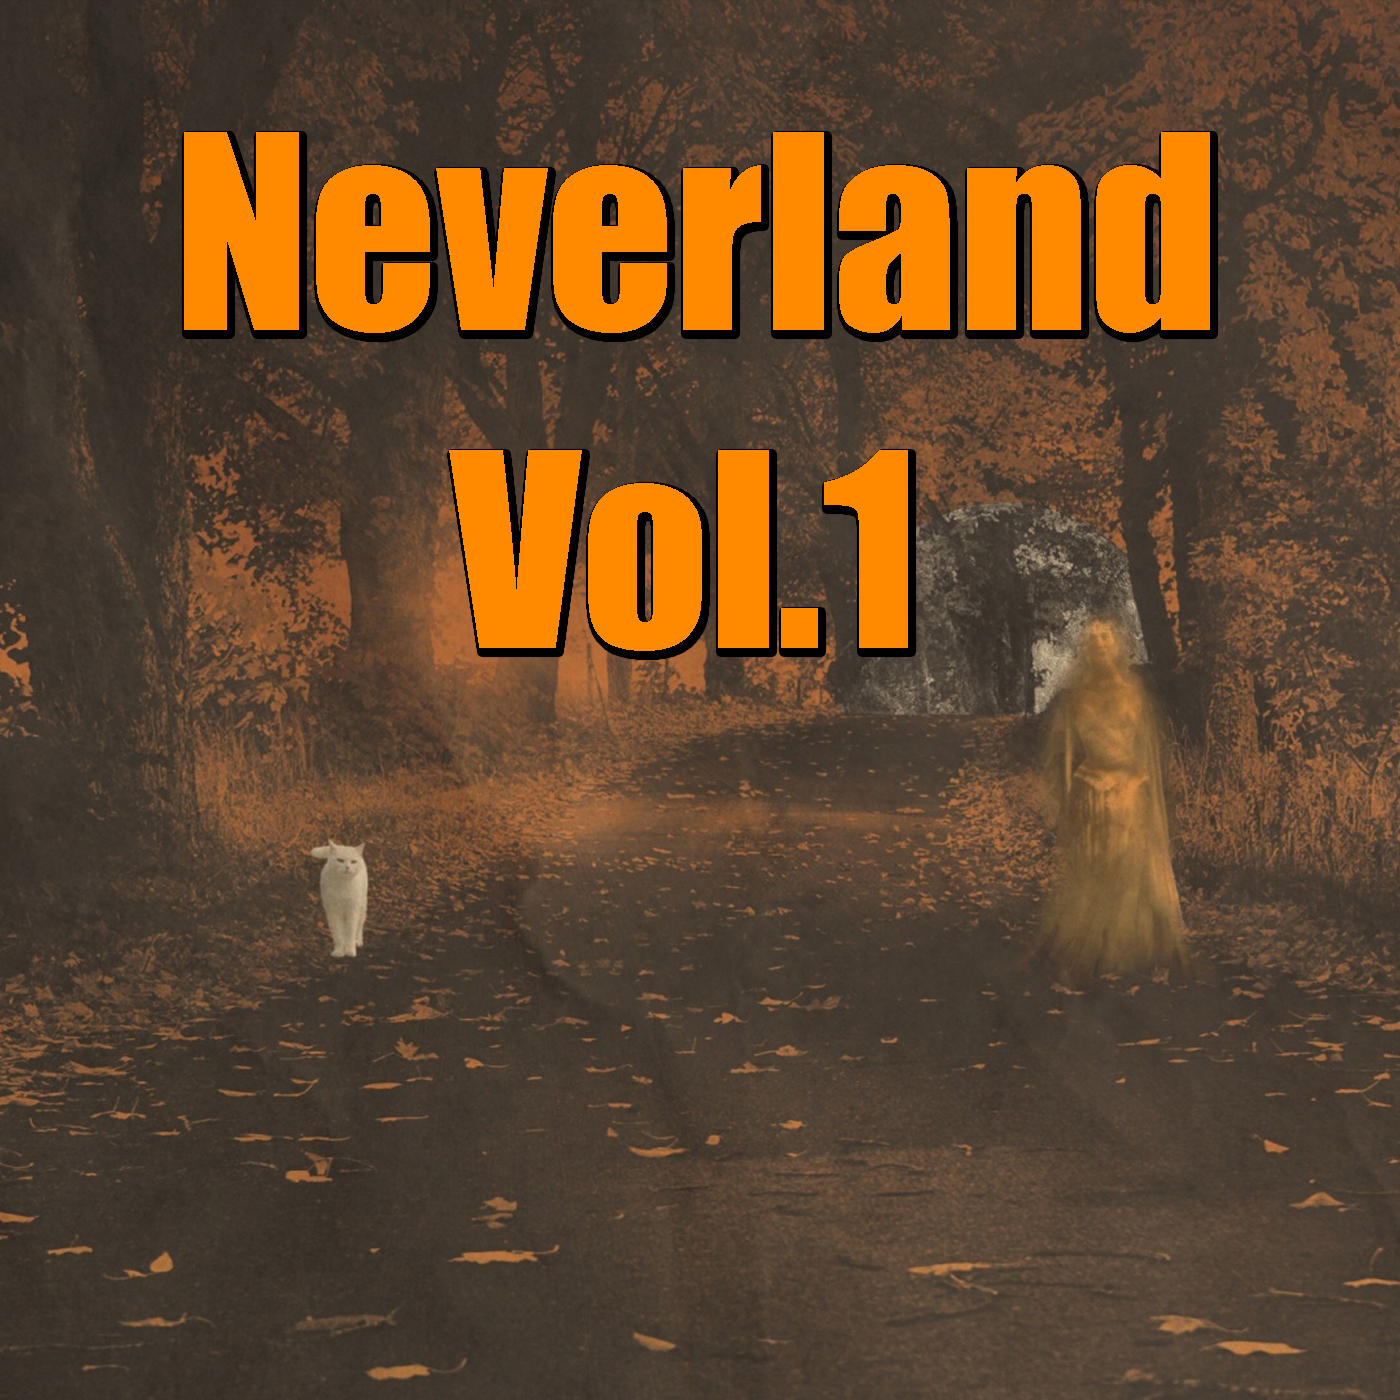 Neverland, Vol. 1